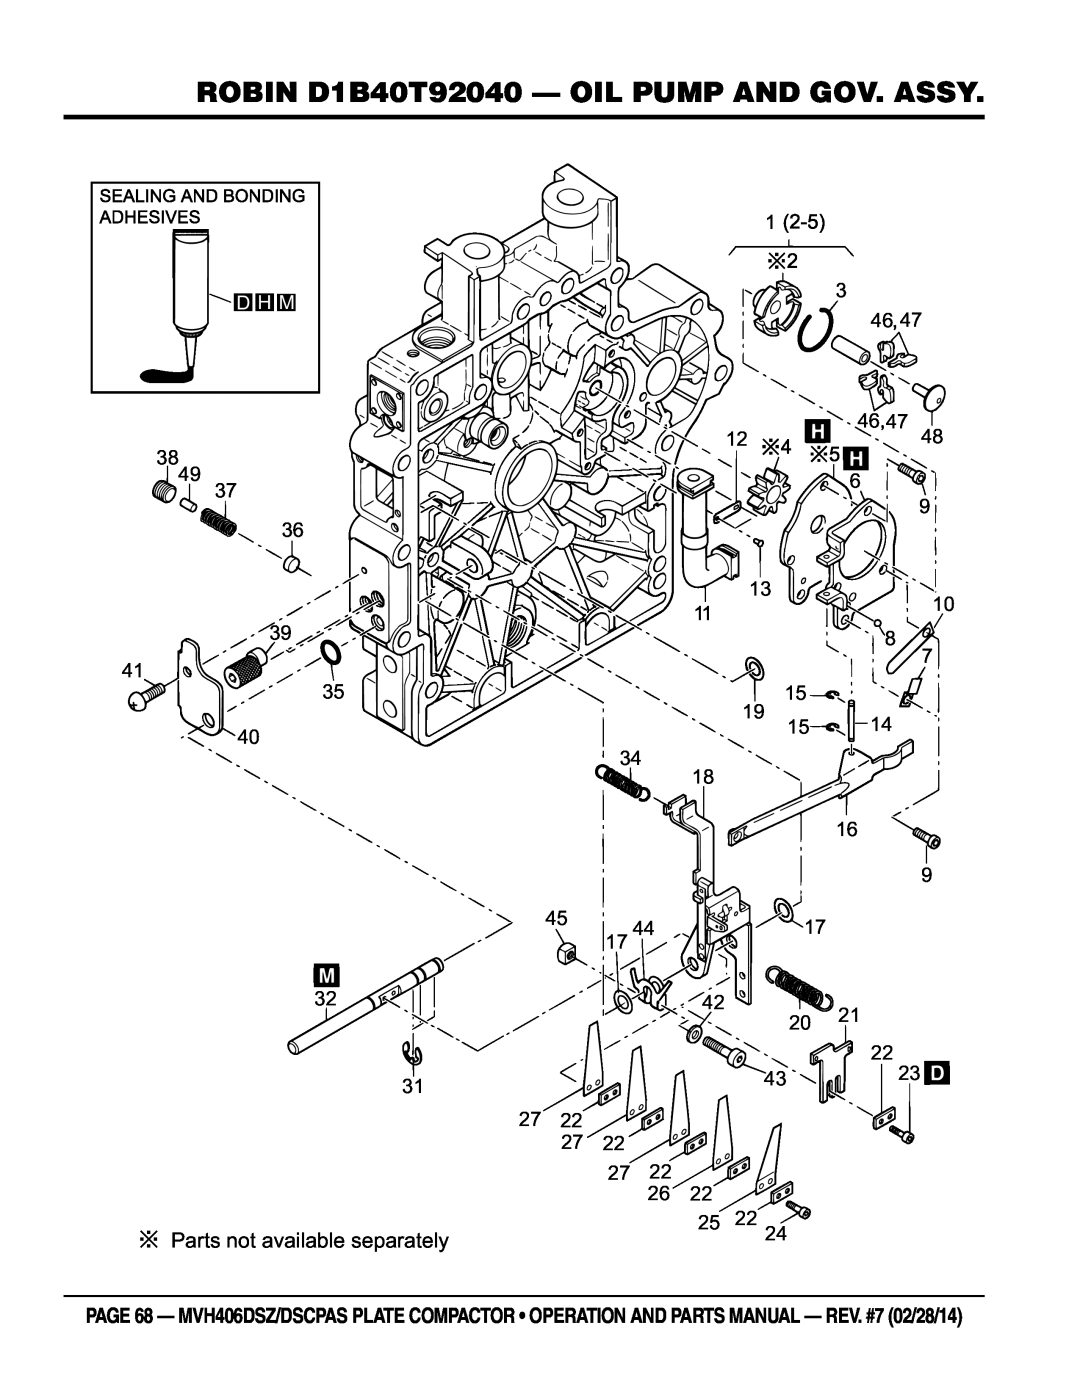 Multiquip MVH406DSZ, MVH406DSCPAS manual ROBIN D1B40T92040 - Oil pump and gov. ASSY, Parts not available separately, D H M 